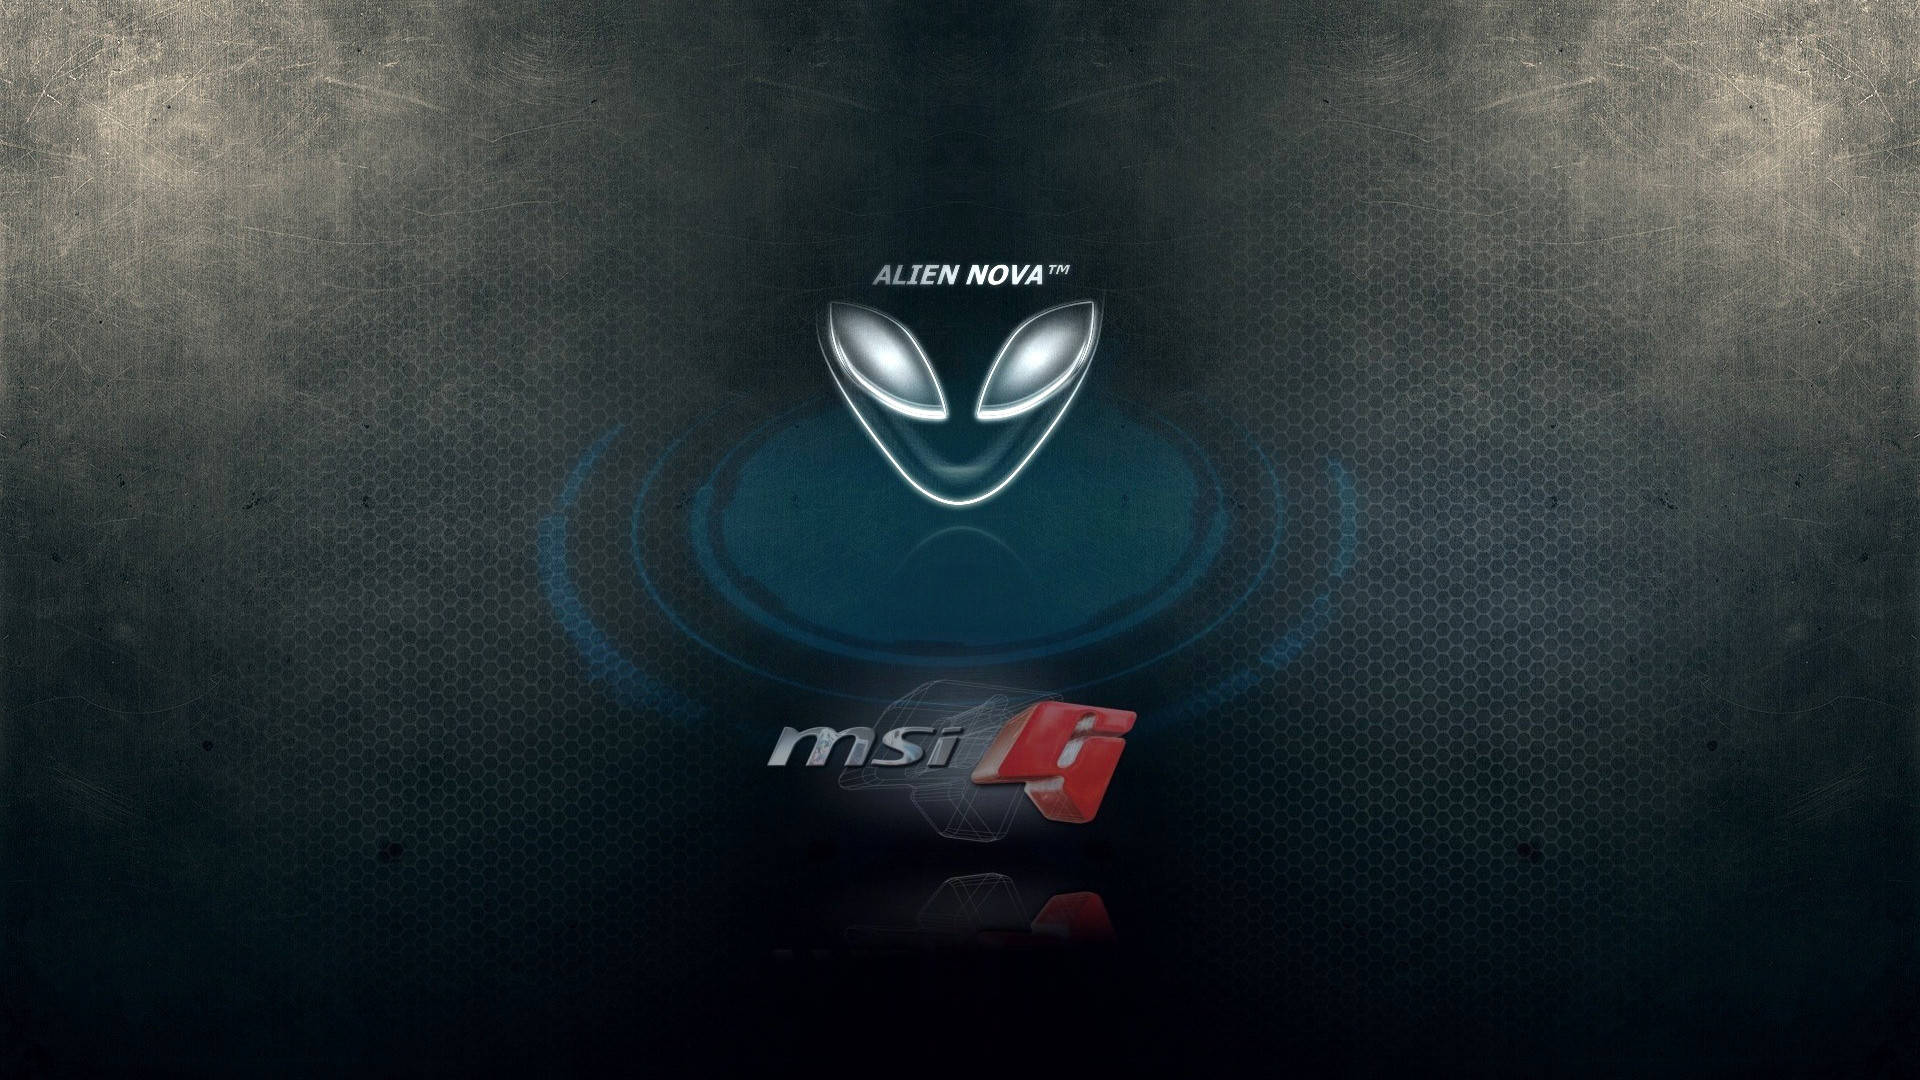 Alienware Logo And Msi Logo